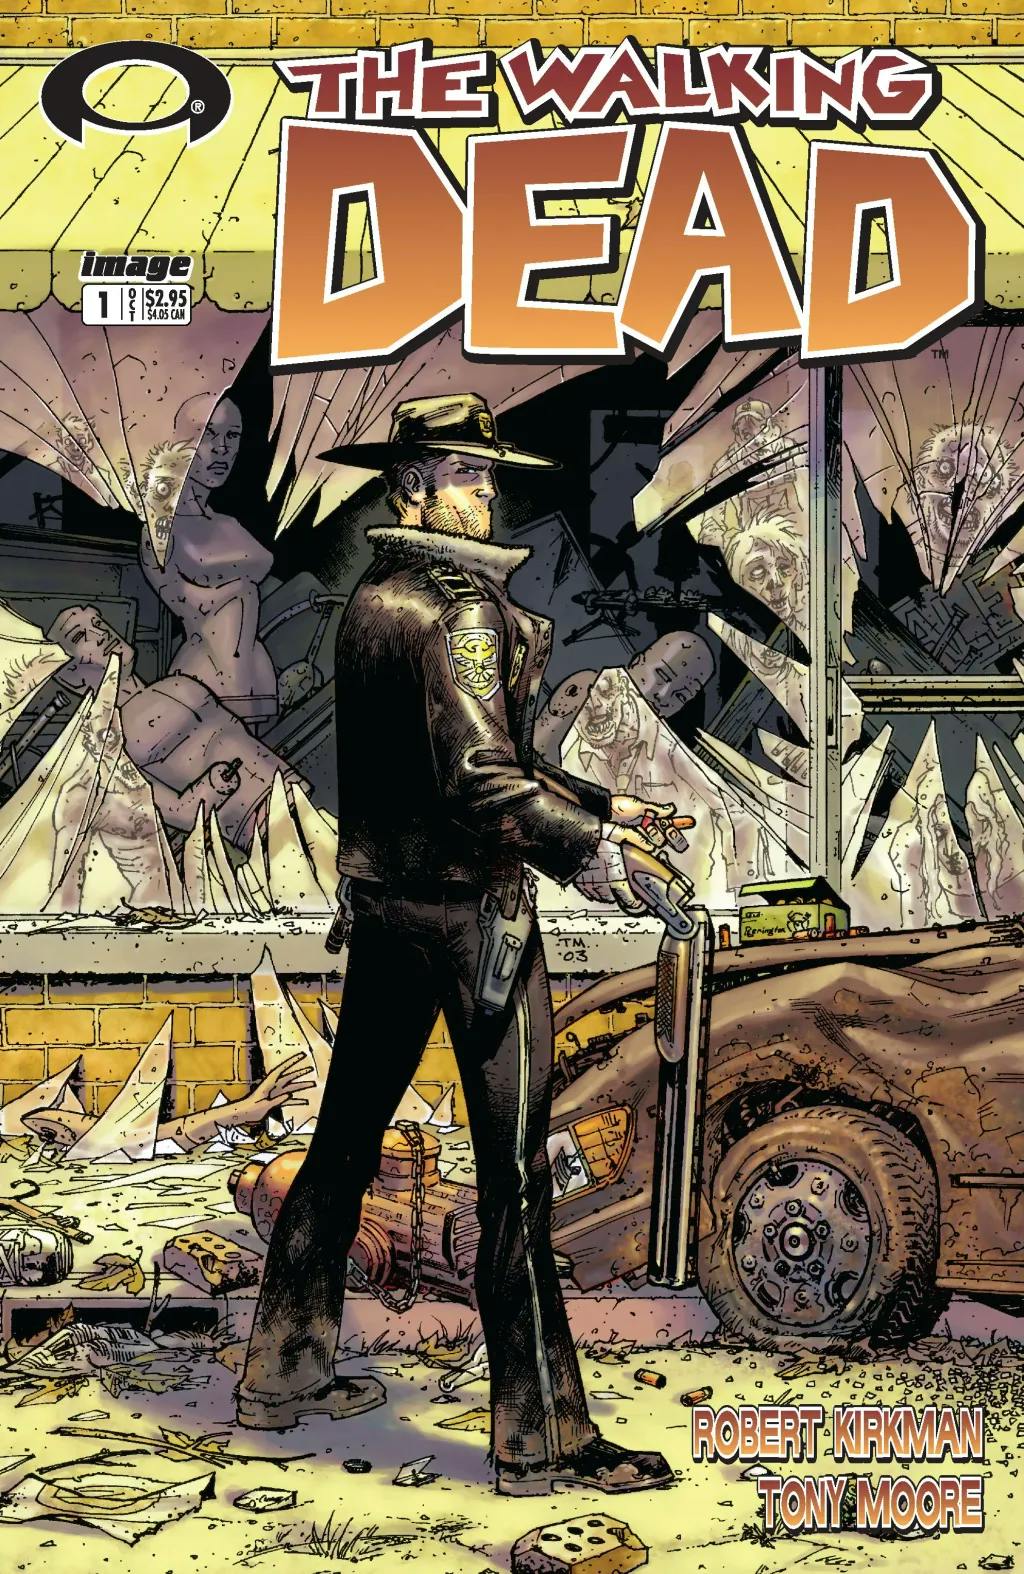 The Walking Dead  By Robert Kirkman, Tony Moore, and Charlie Adlard